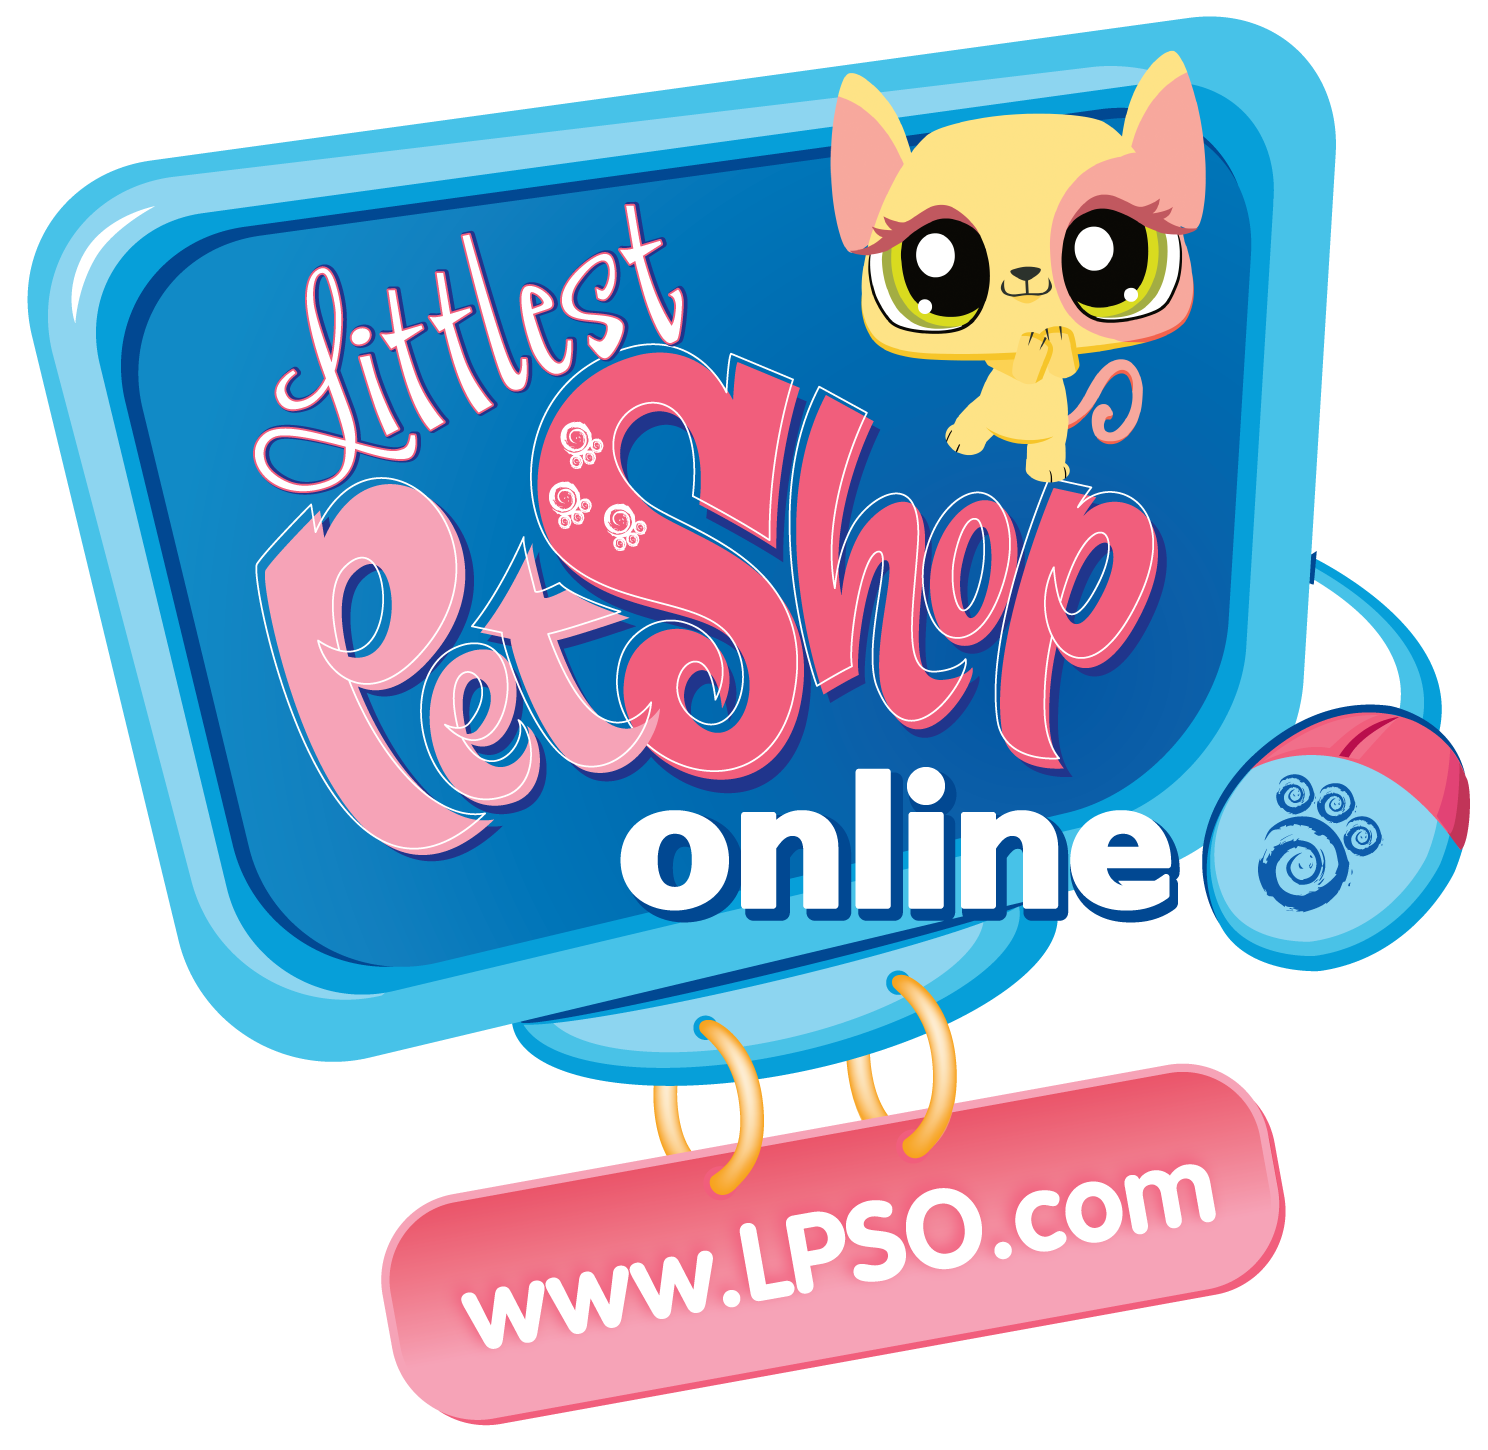 Littlest Pet Shop Online (partially found assets of children's